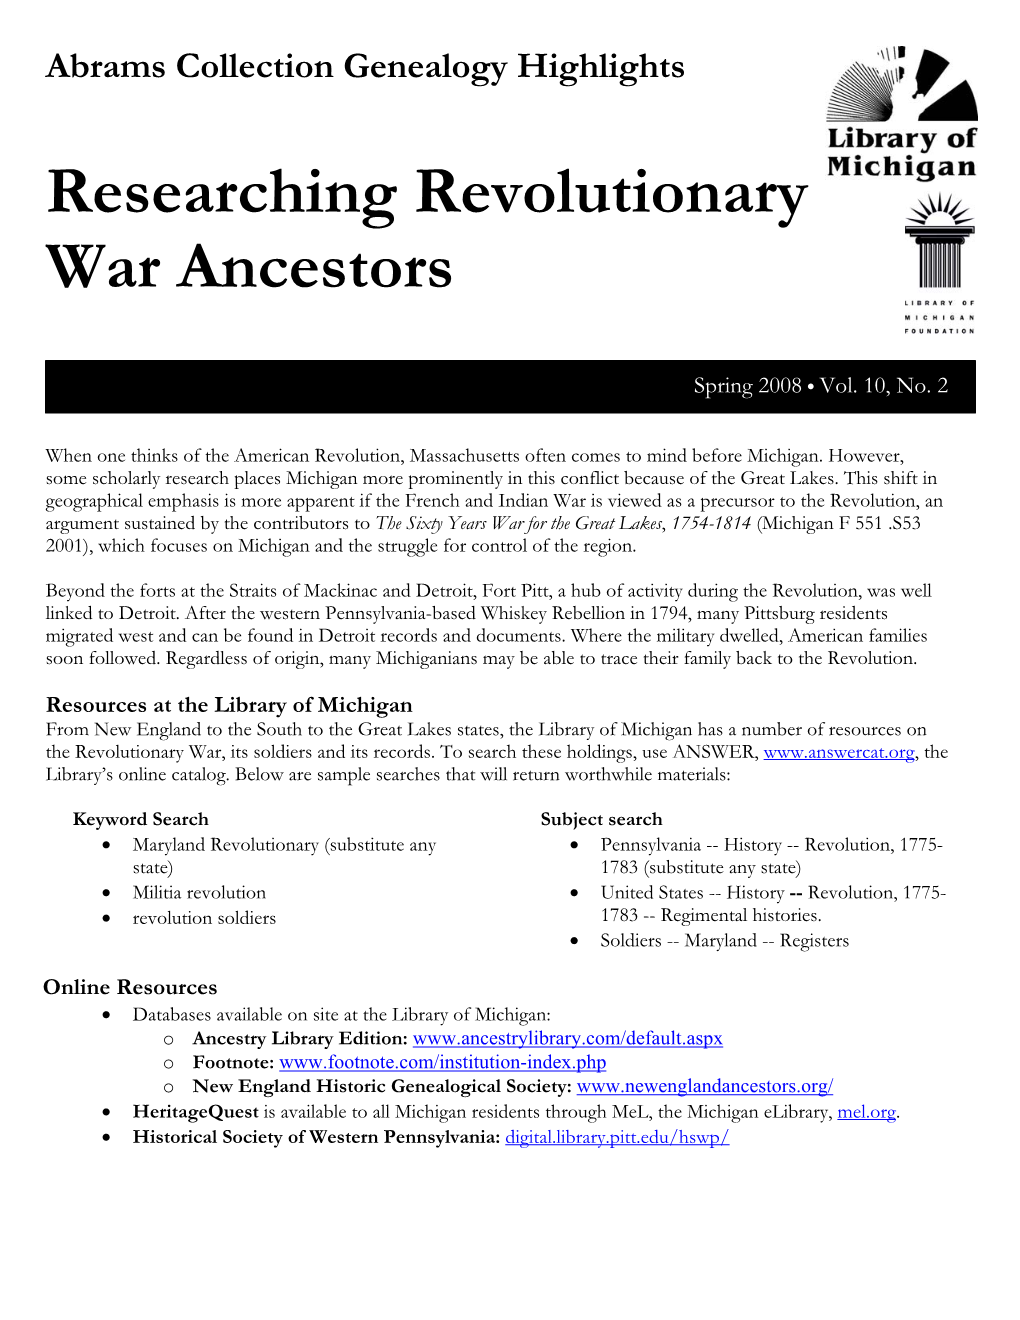 Researching Revolutionary War Ancestors